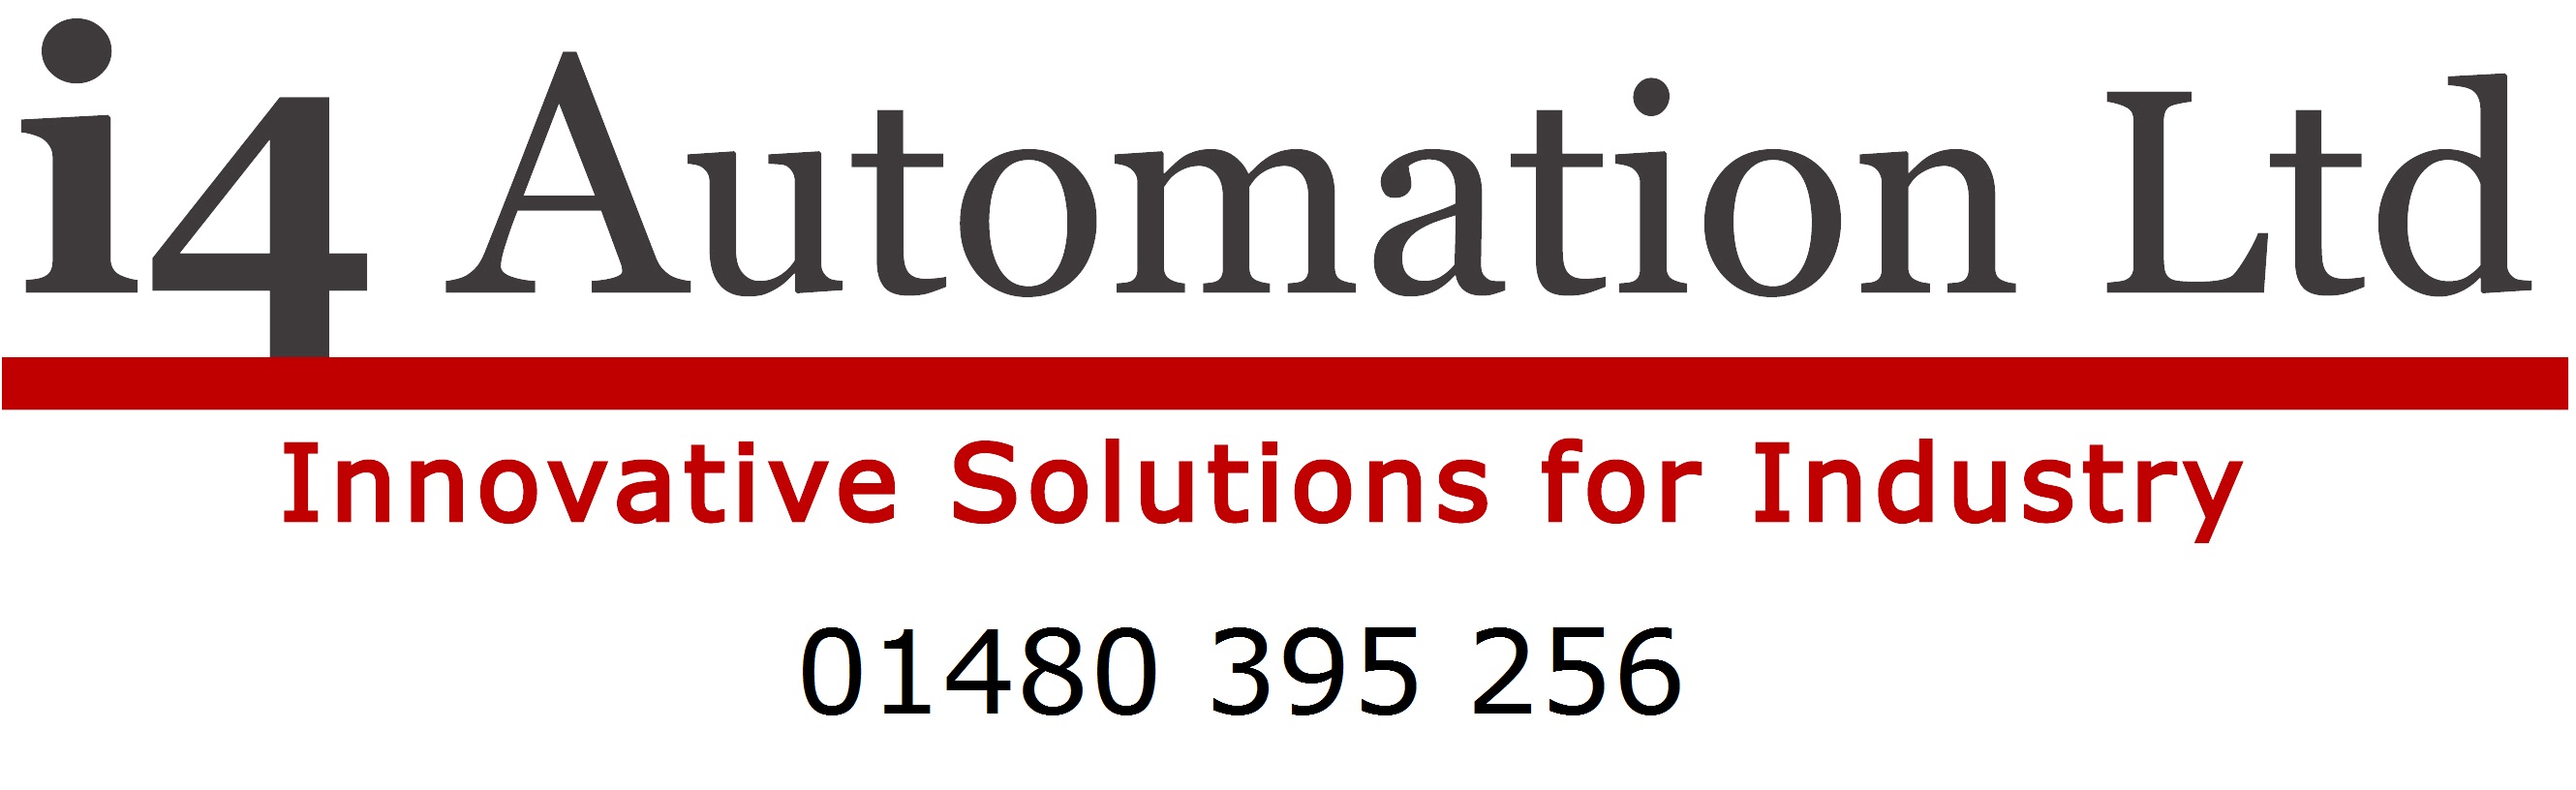 i4 Automation Ltd